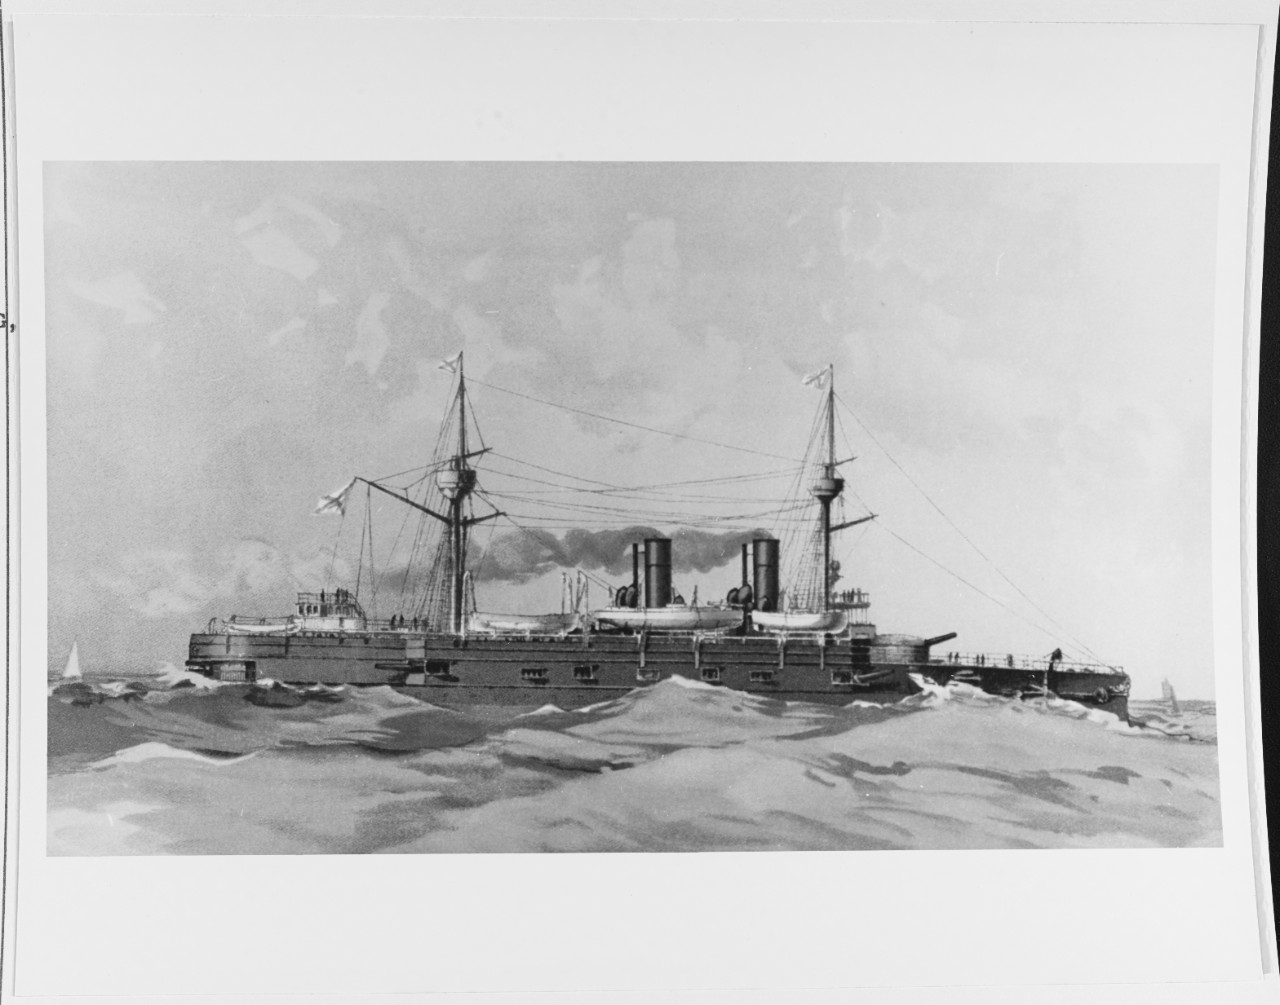 IMPERATOR ALEXANDER II (Russian battleship, 1887)